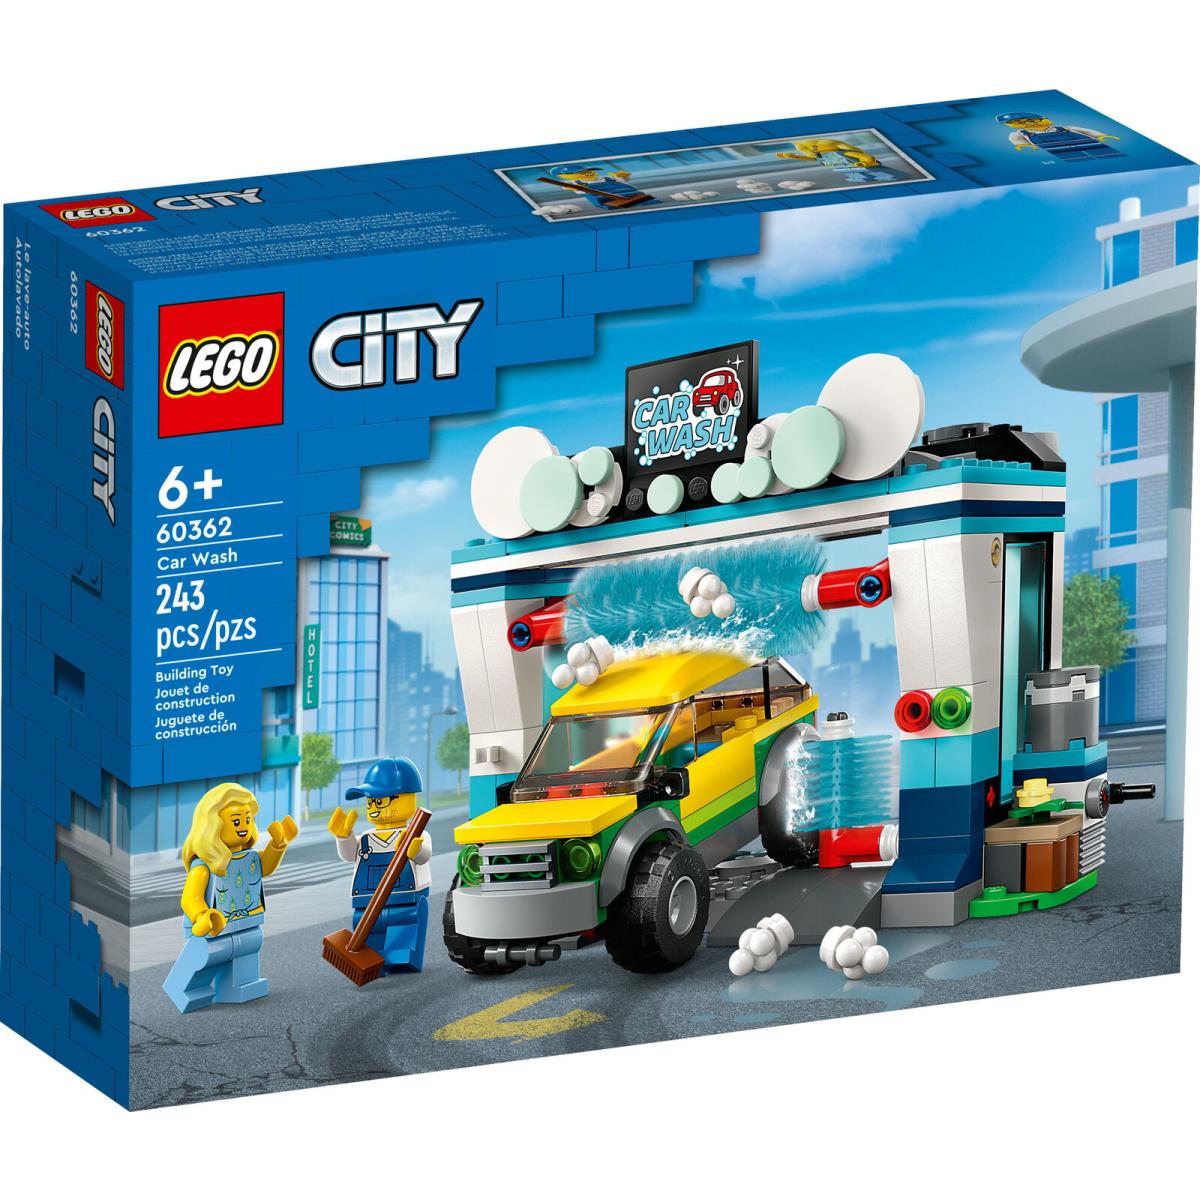 Lego City Car Wash 60362 Building Toy Set Gift